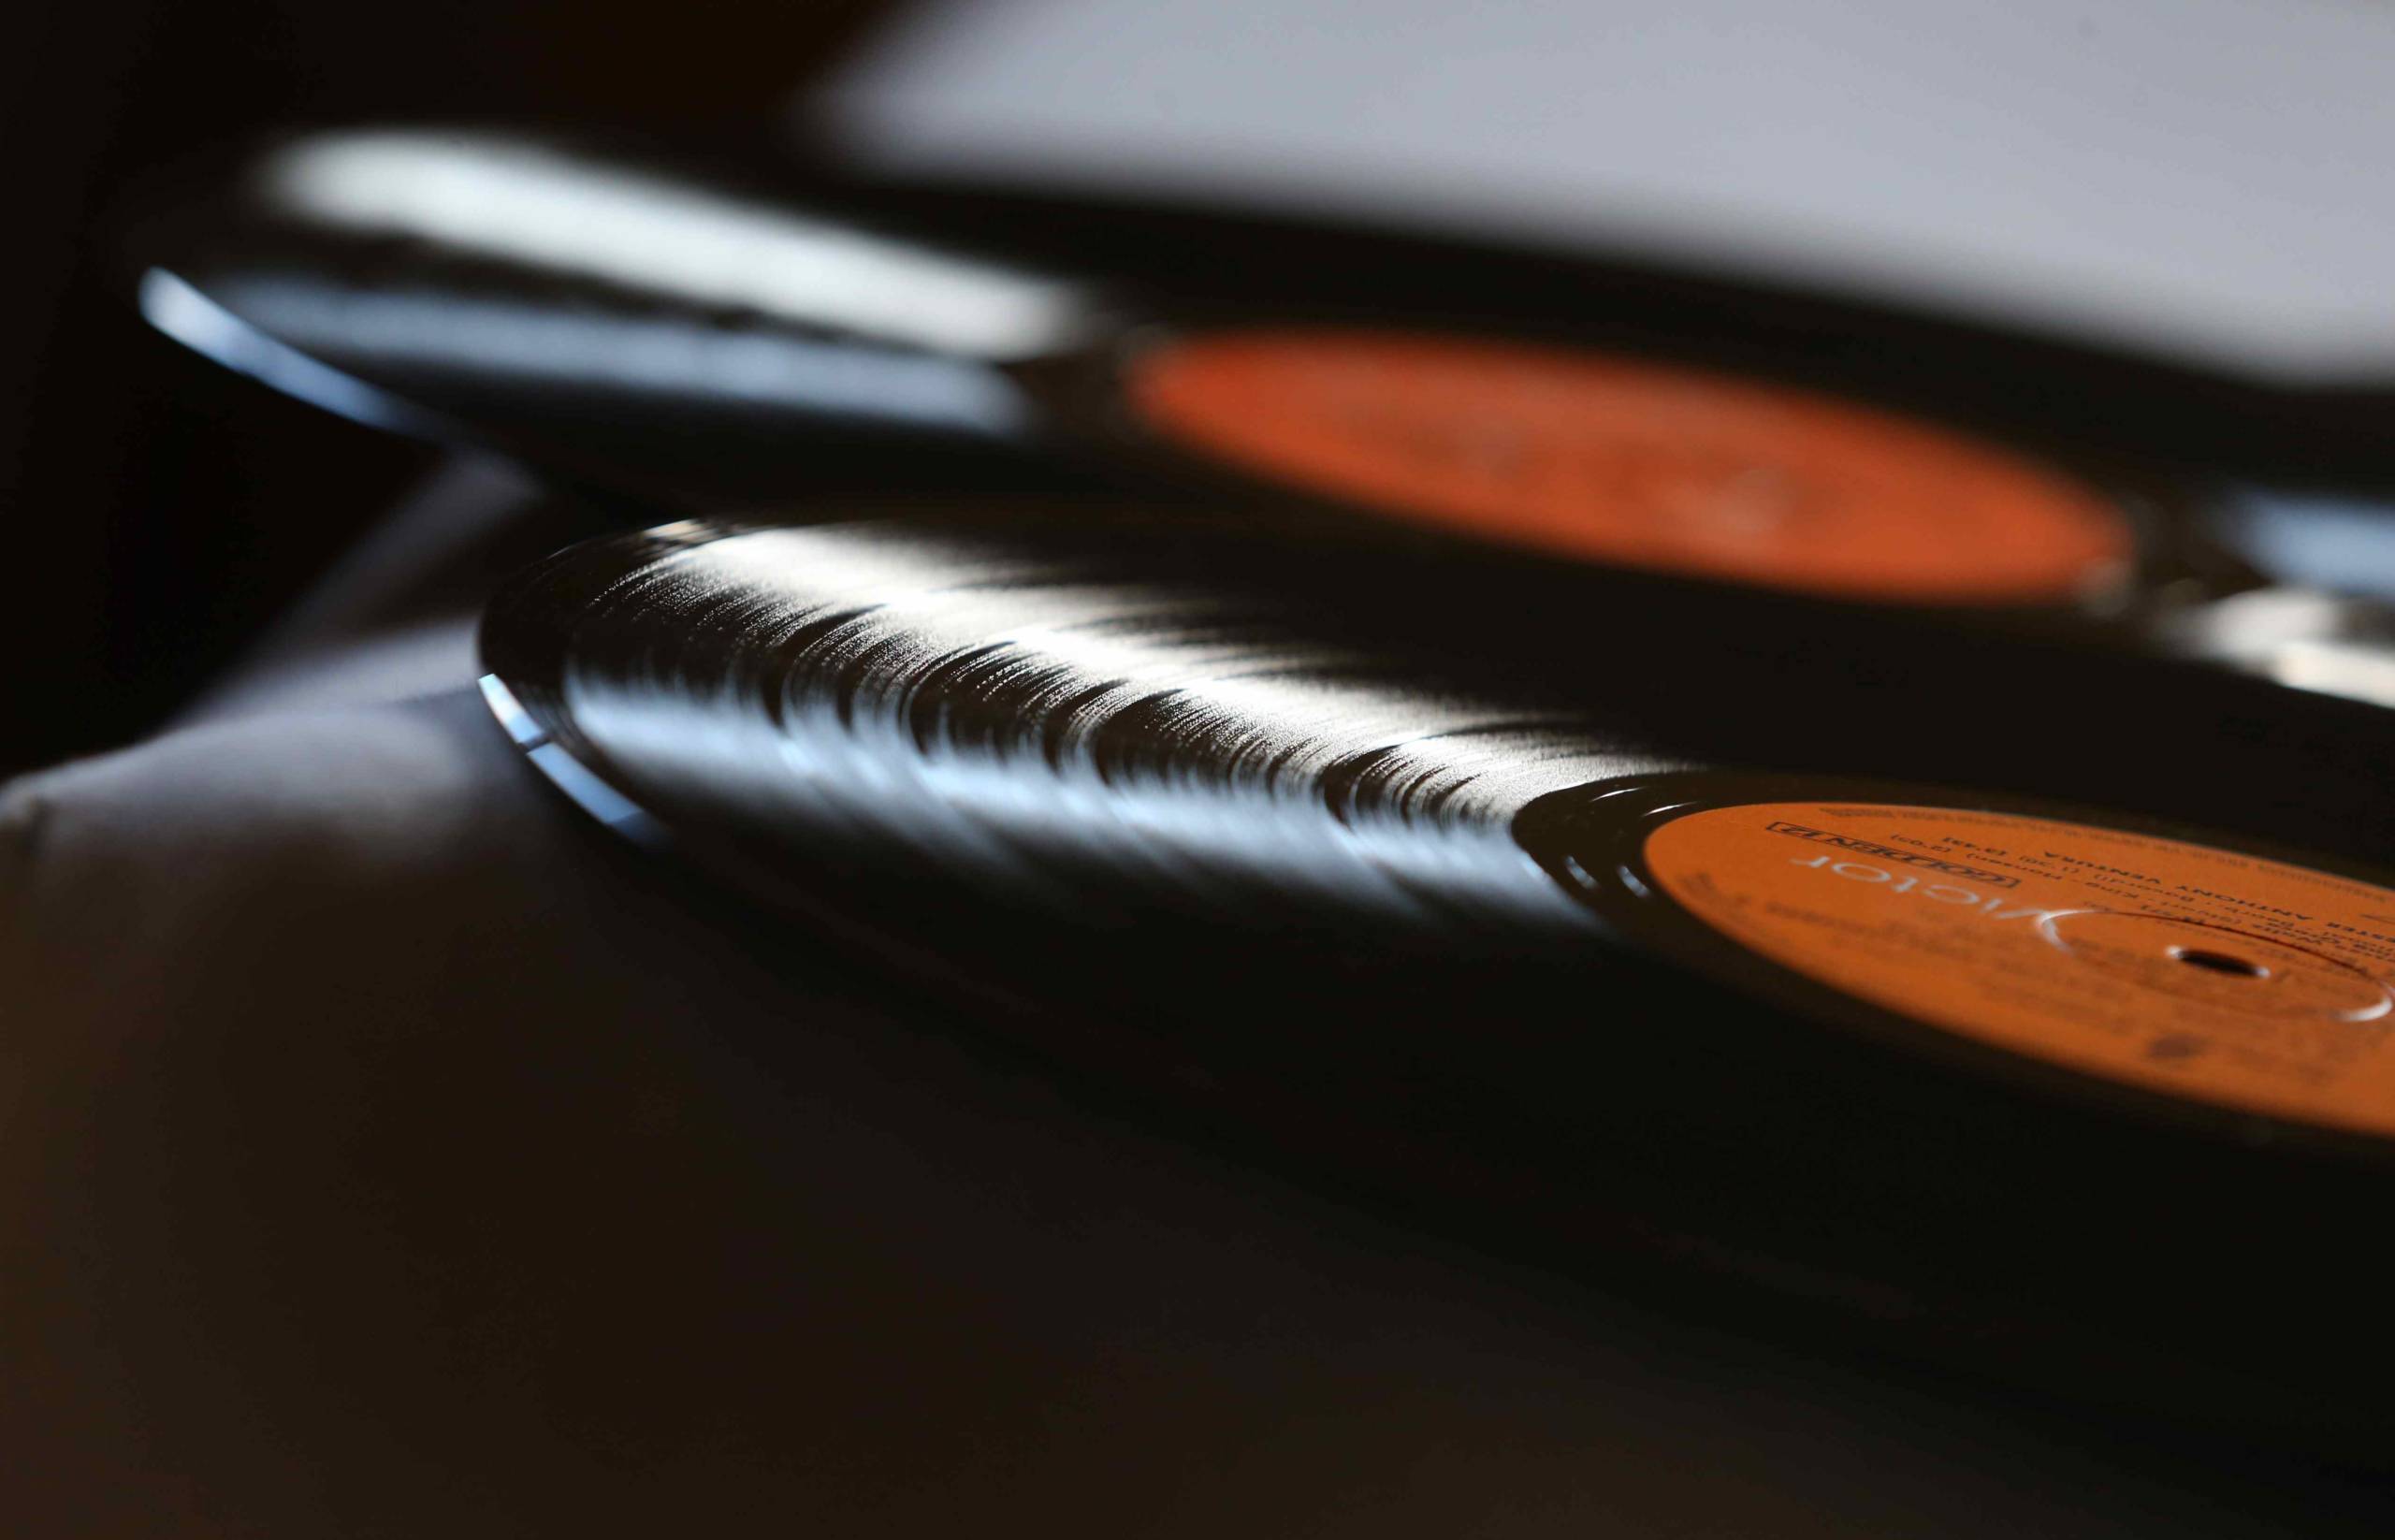 Discogs ist längst zum Vinyl-Mekka geworden